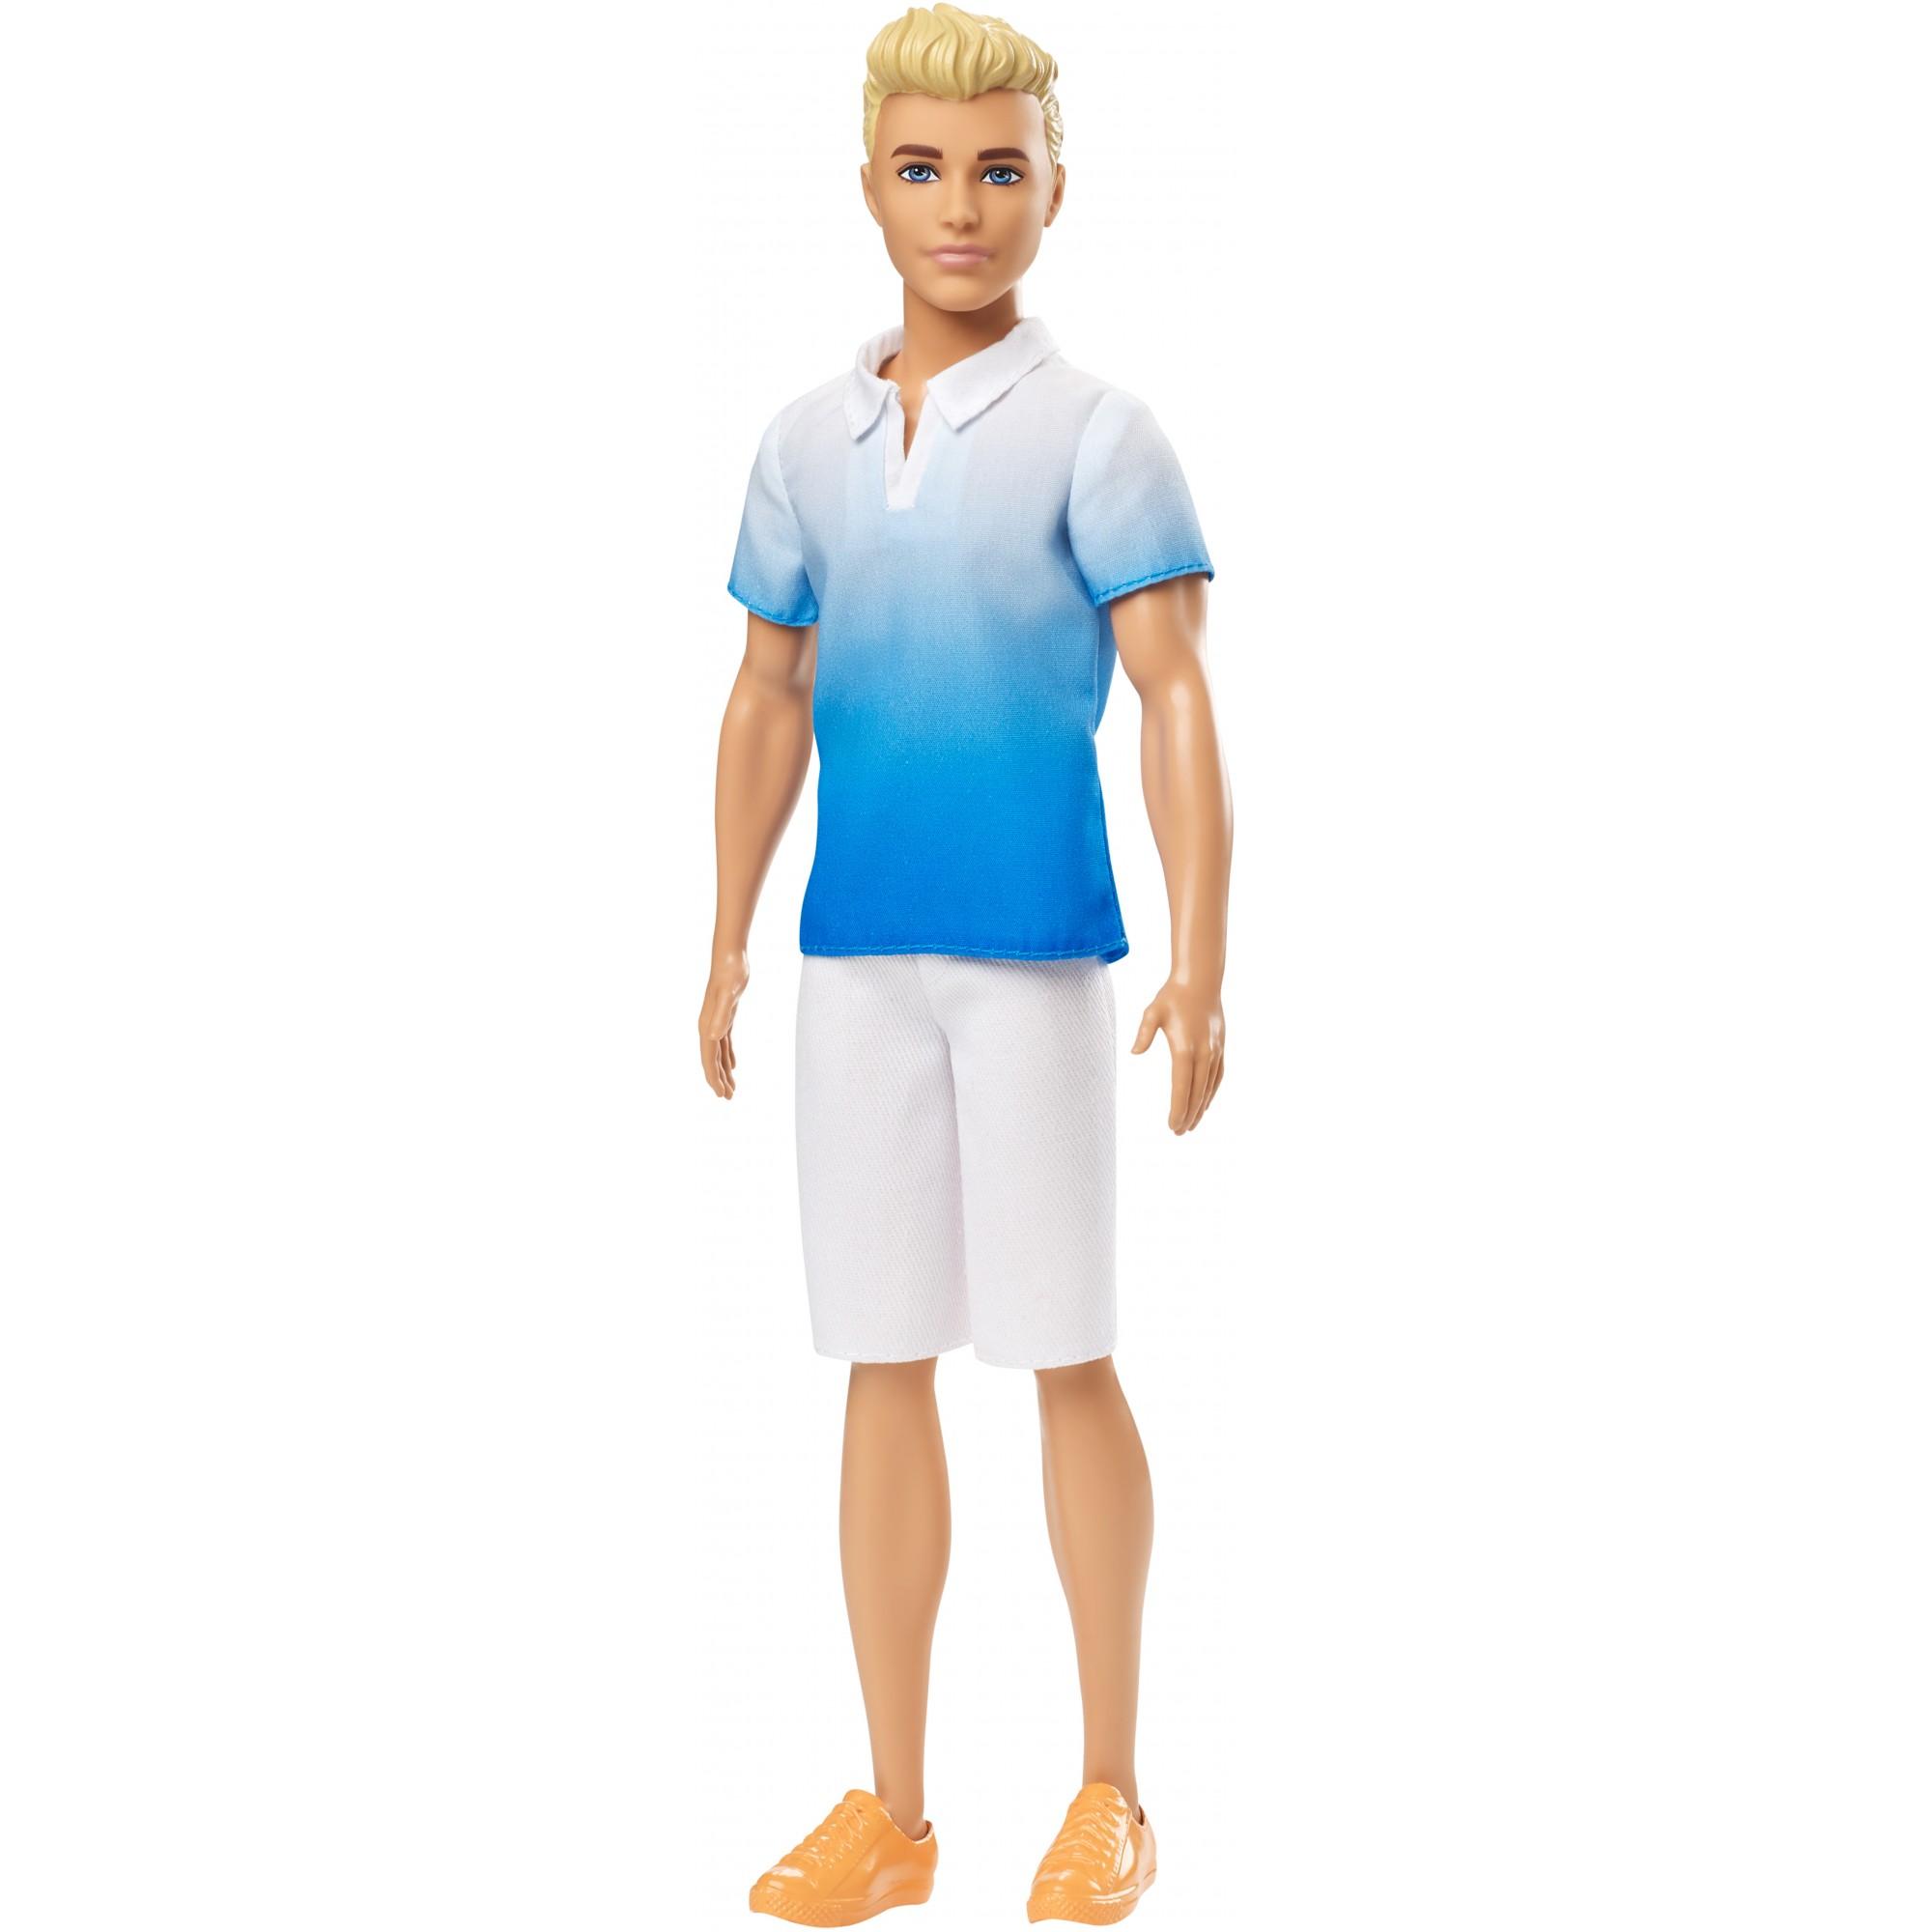 Barbie Ken Fashionistas Doll, Blonde Wearing Blue Ombre Shirt - image 1 of 6